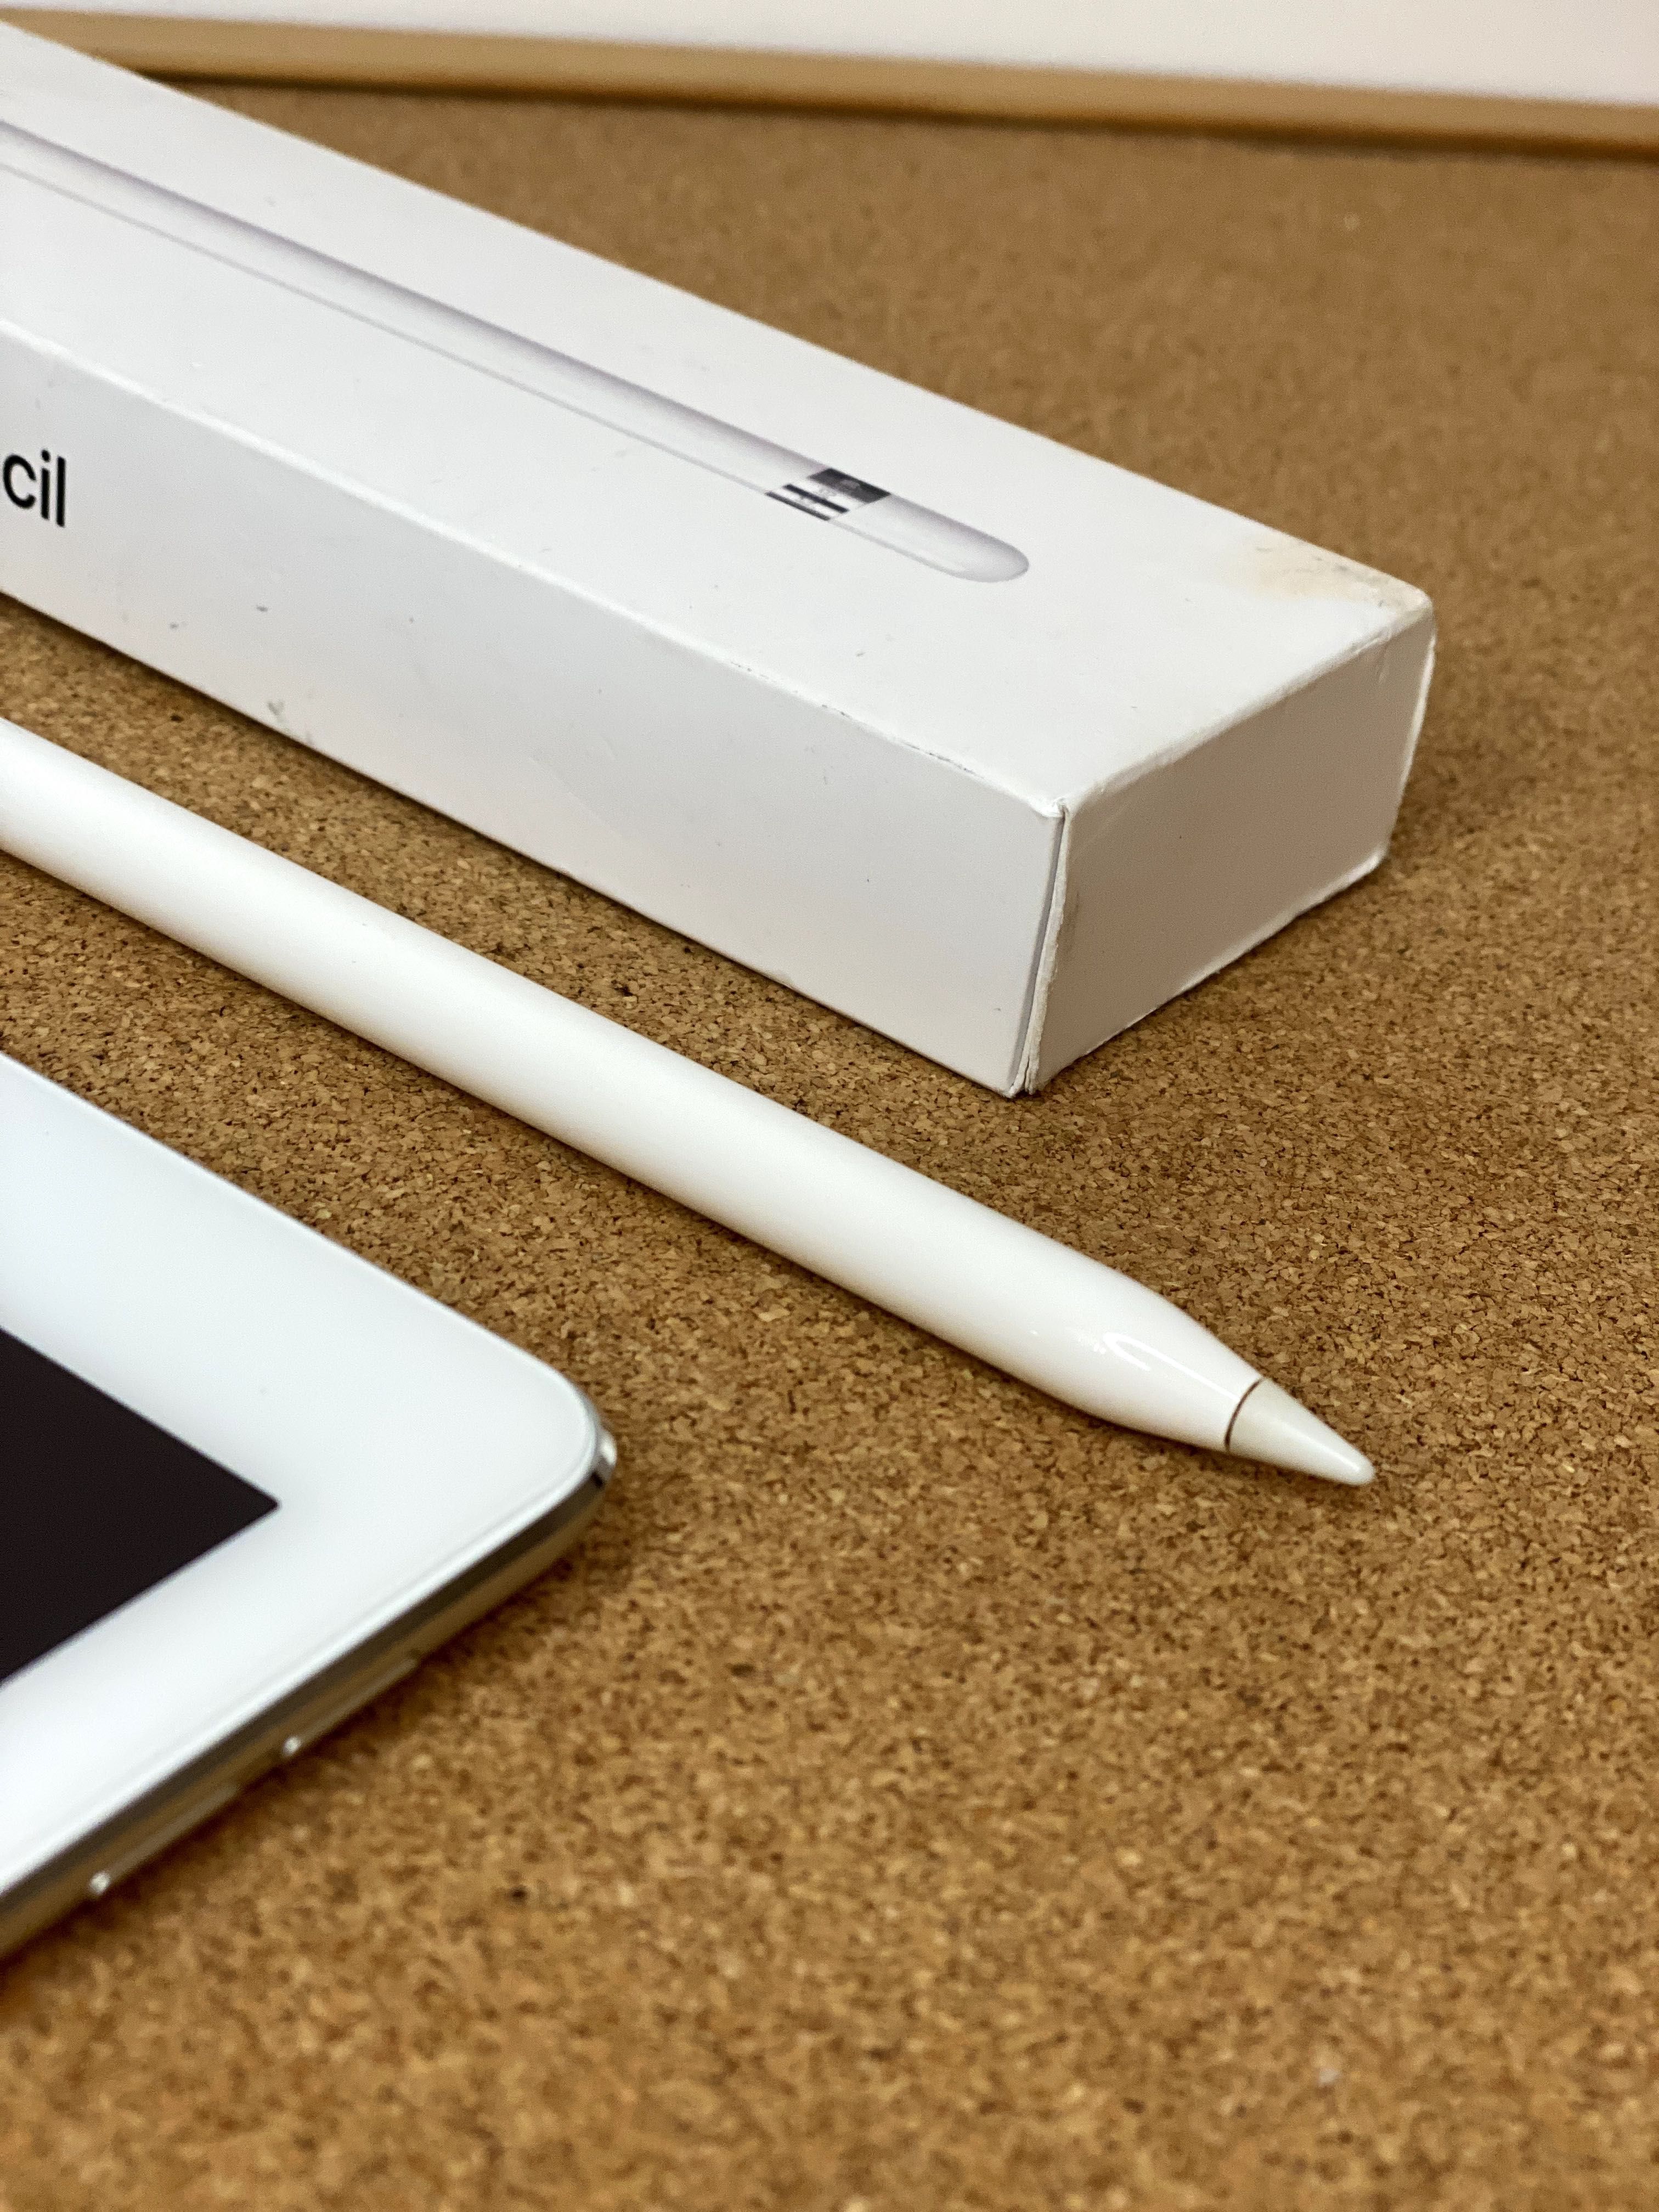 iPad Pro 12.9 + Apple Pencil